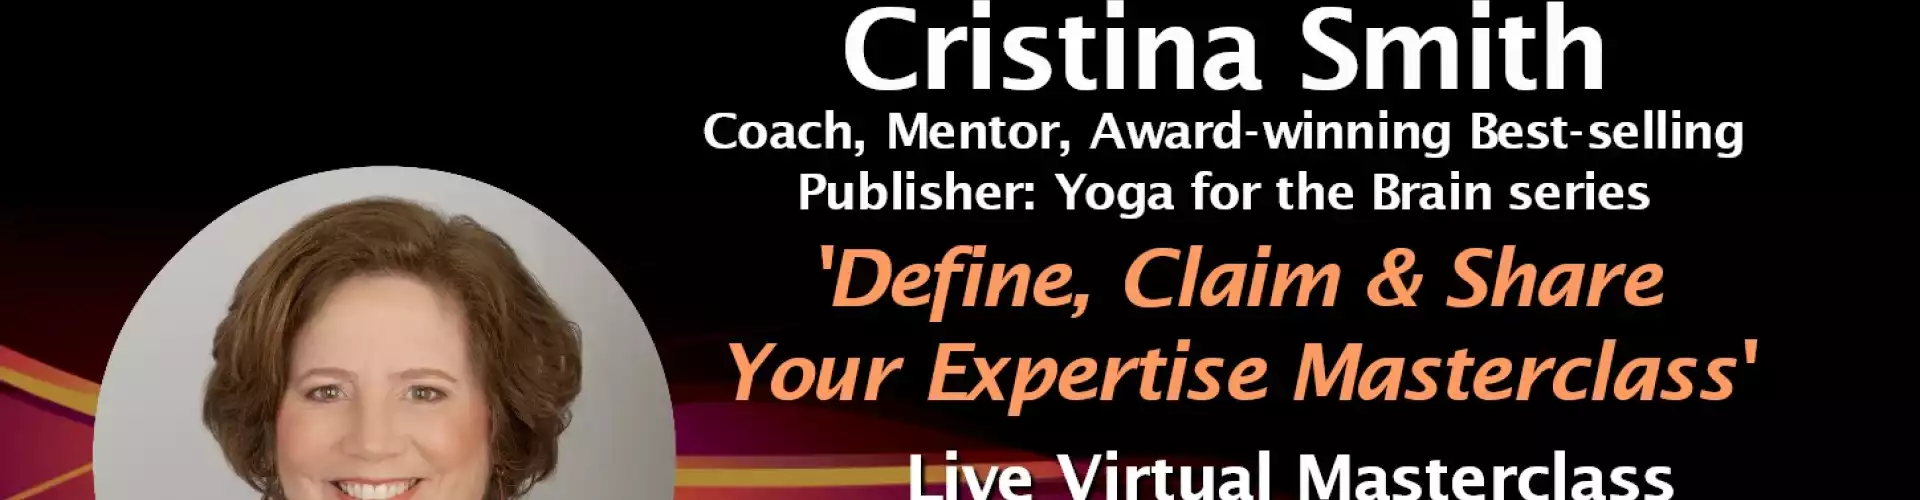 Define, Claim & Share Your Expertise Masterclass w WU Expert Cristina Smith